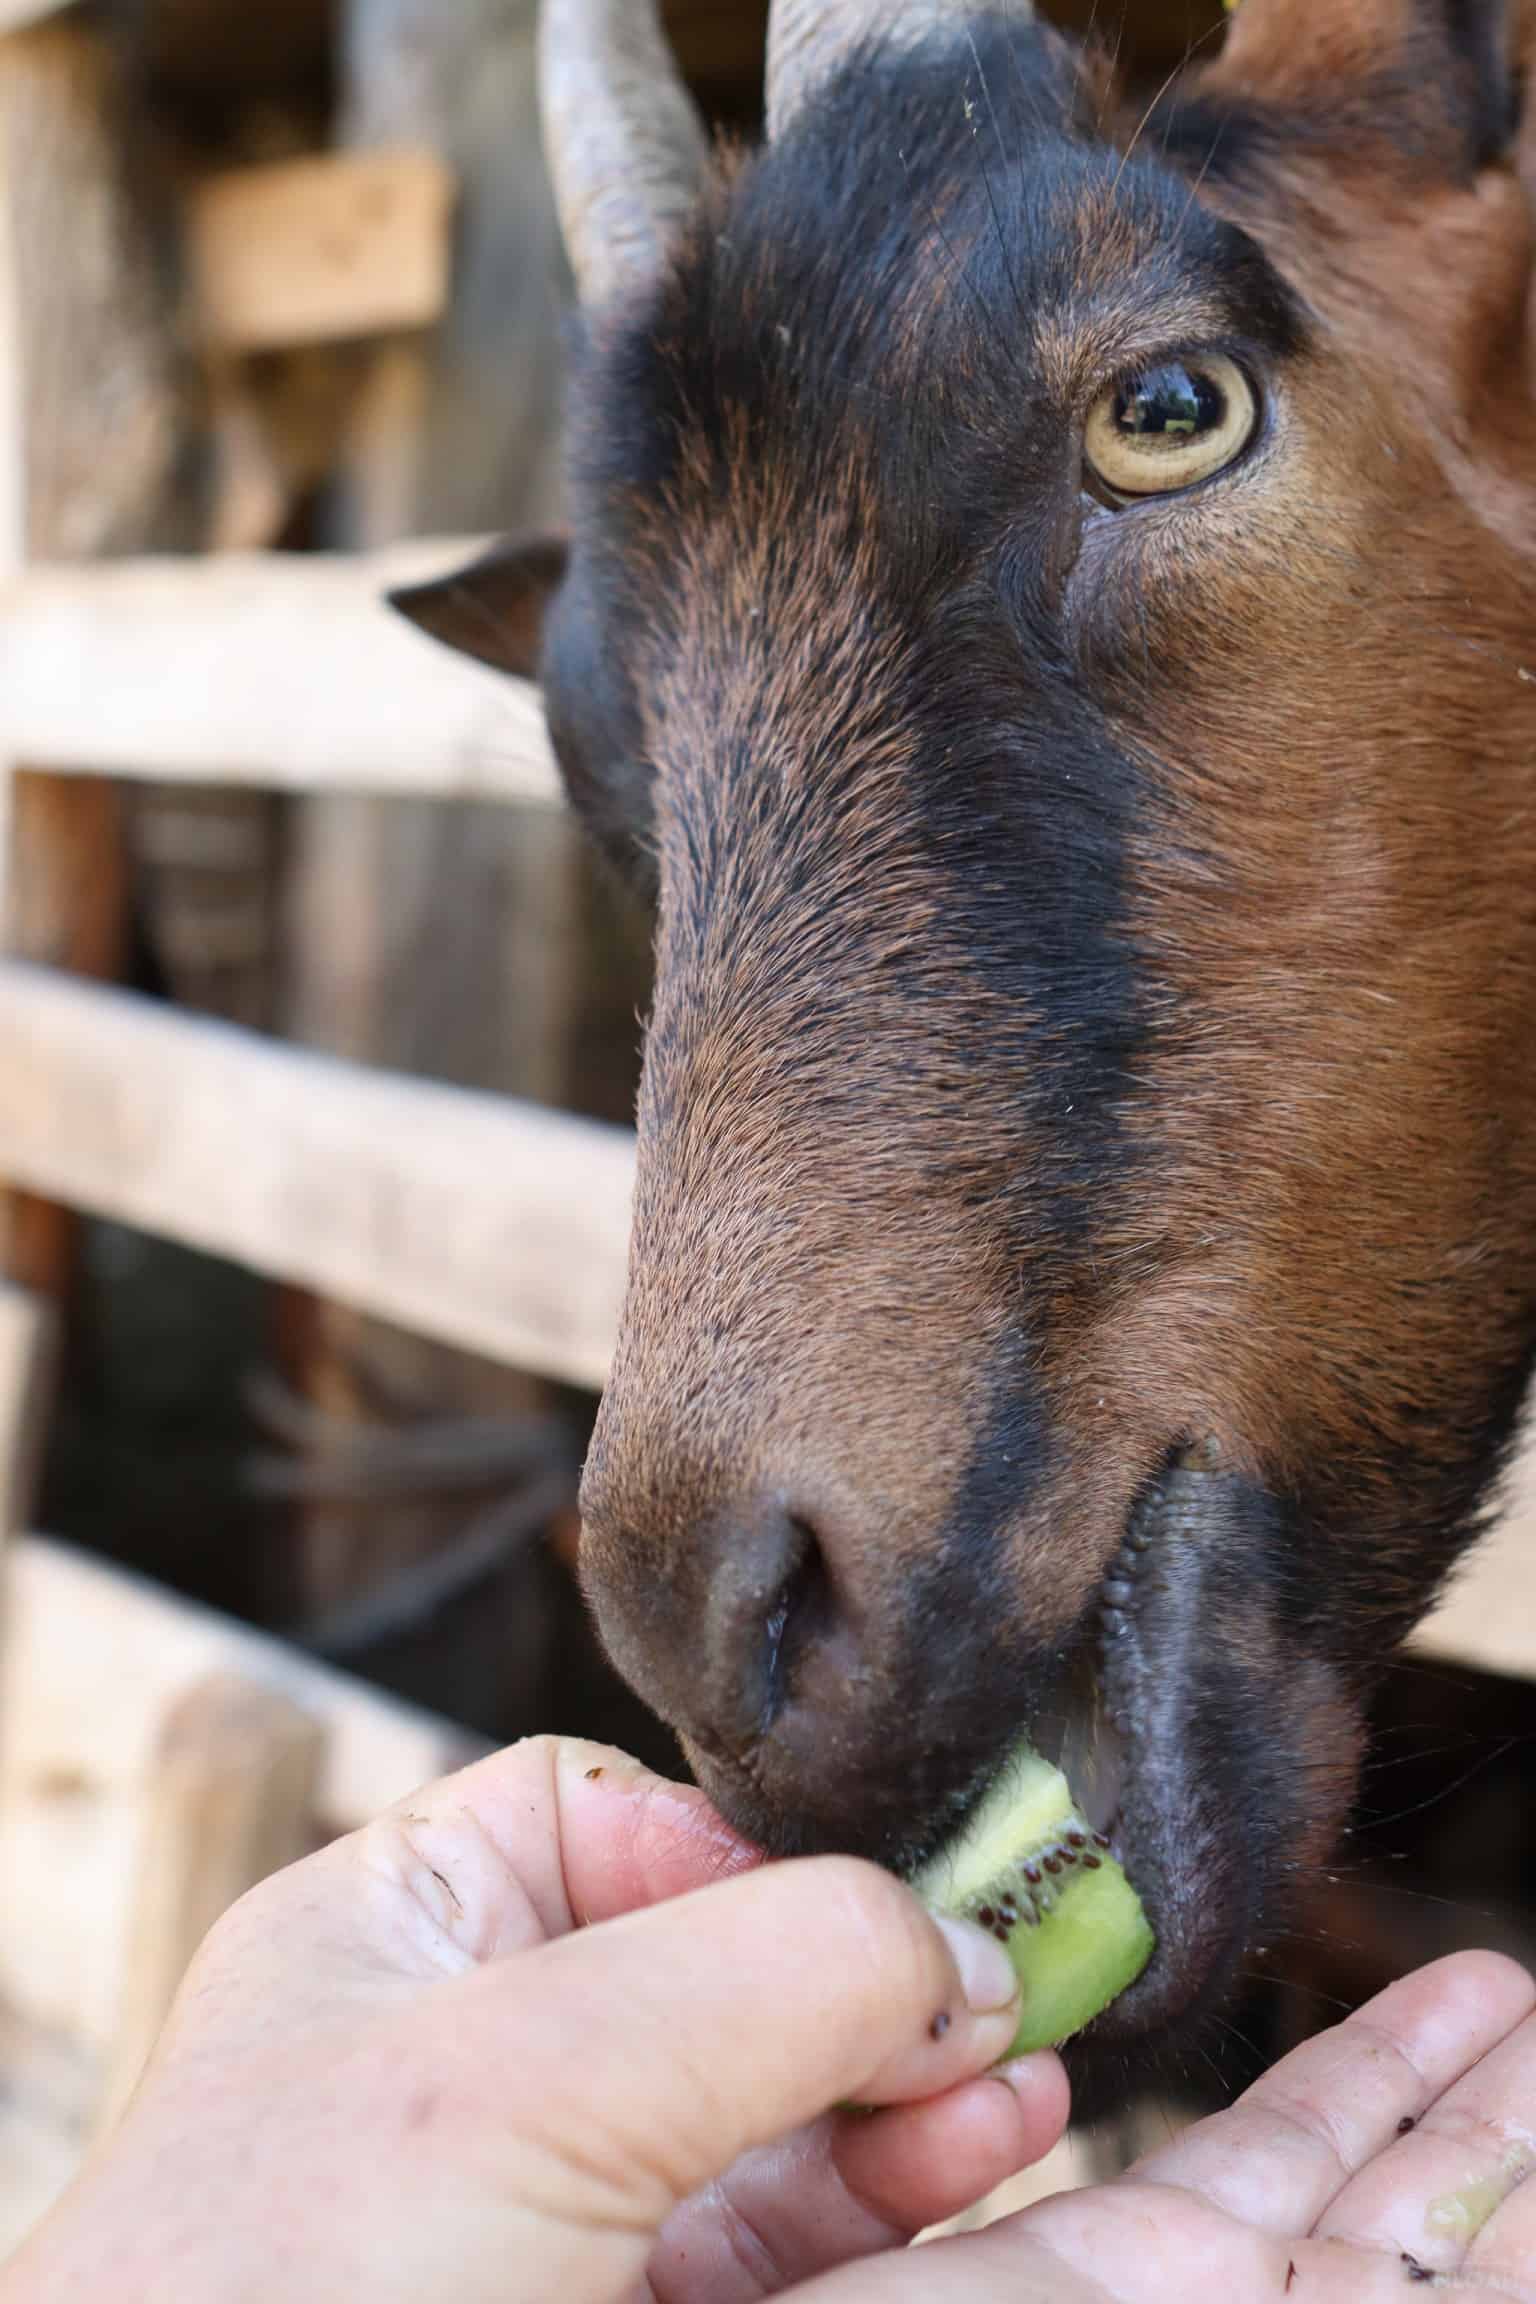 Can Goats Eat Kiwi